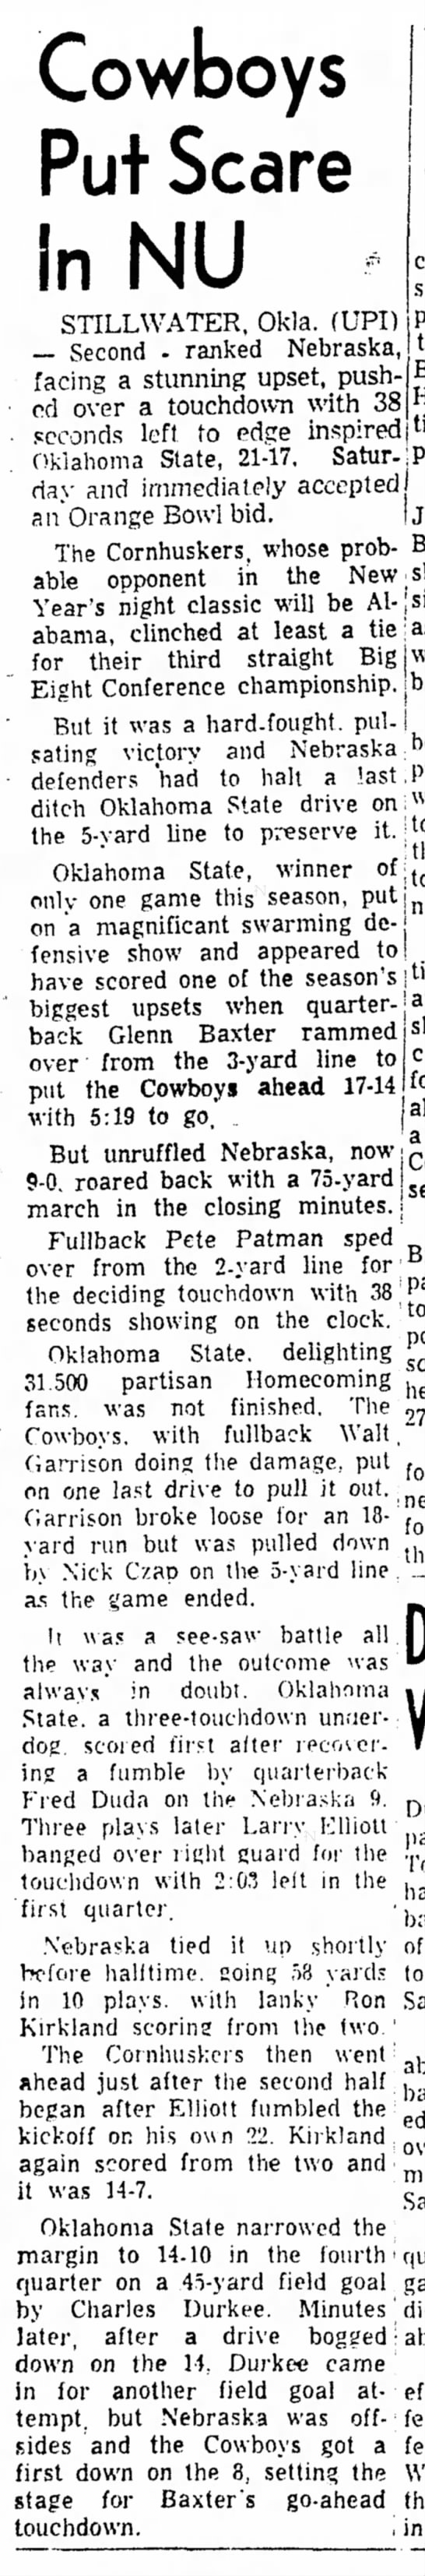 1965 Nebraska-Oklahoma State, UPI - 